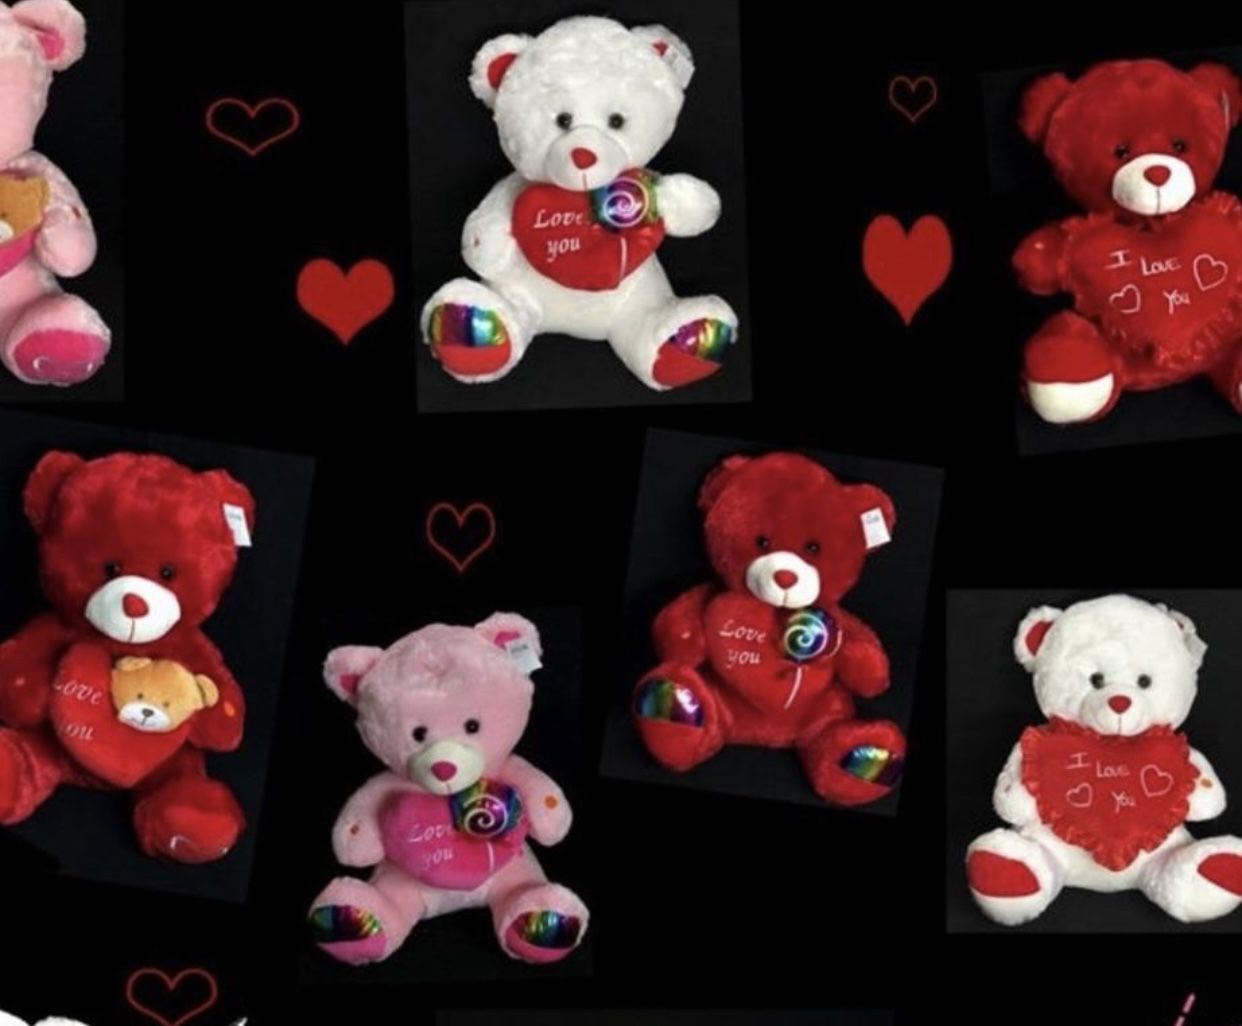 Valentines Teddy bear “I love You”